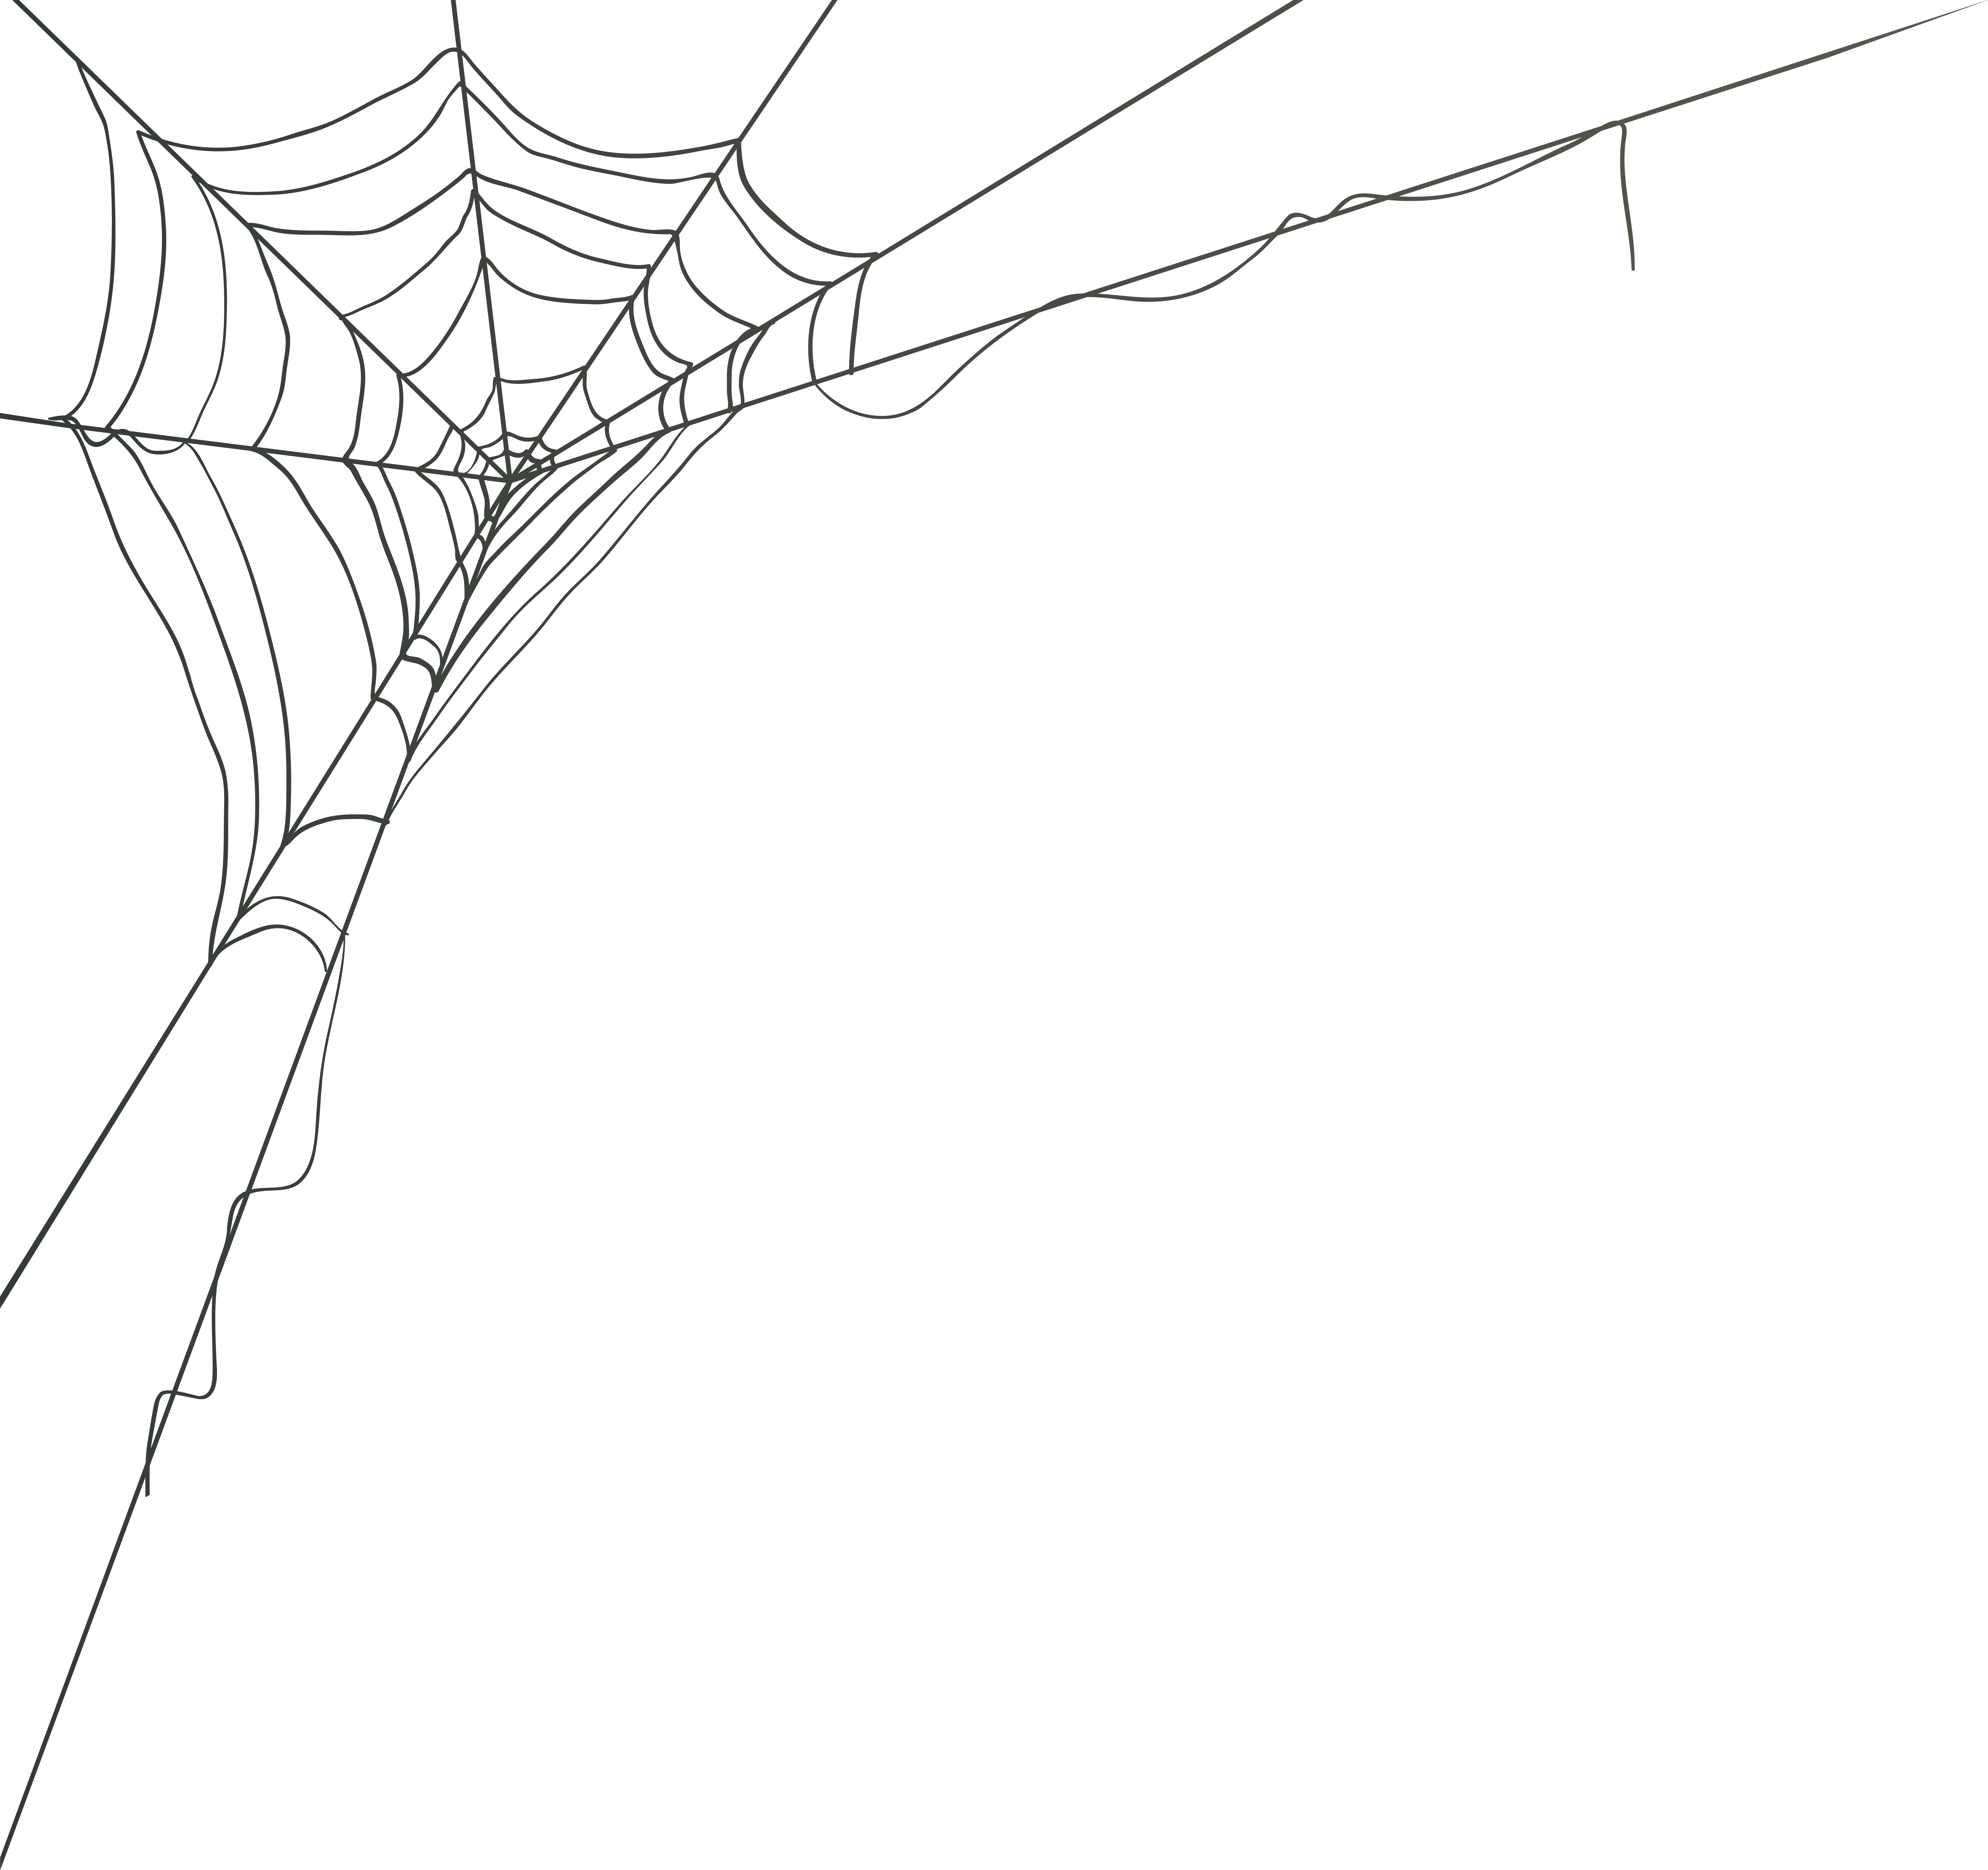 Spider Web Corner PNG Clip Art Image | Gallery ...